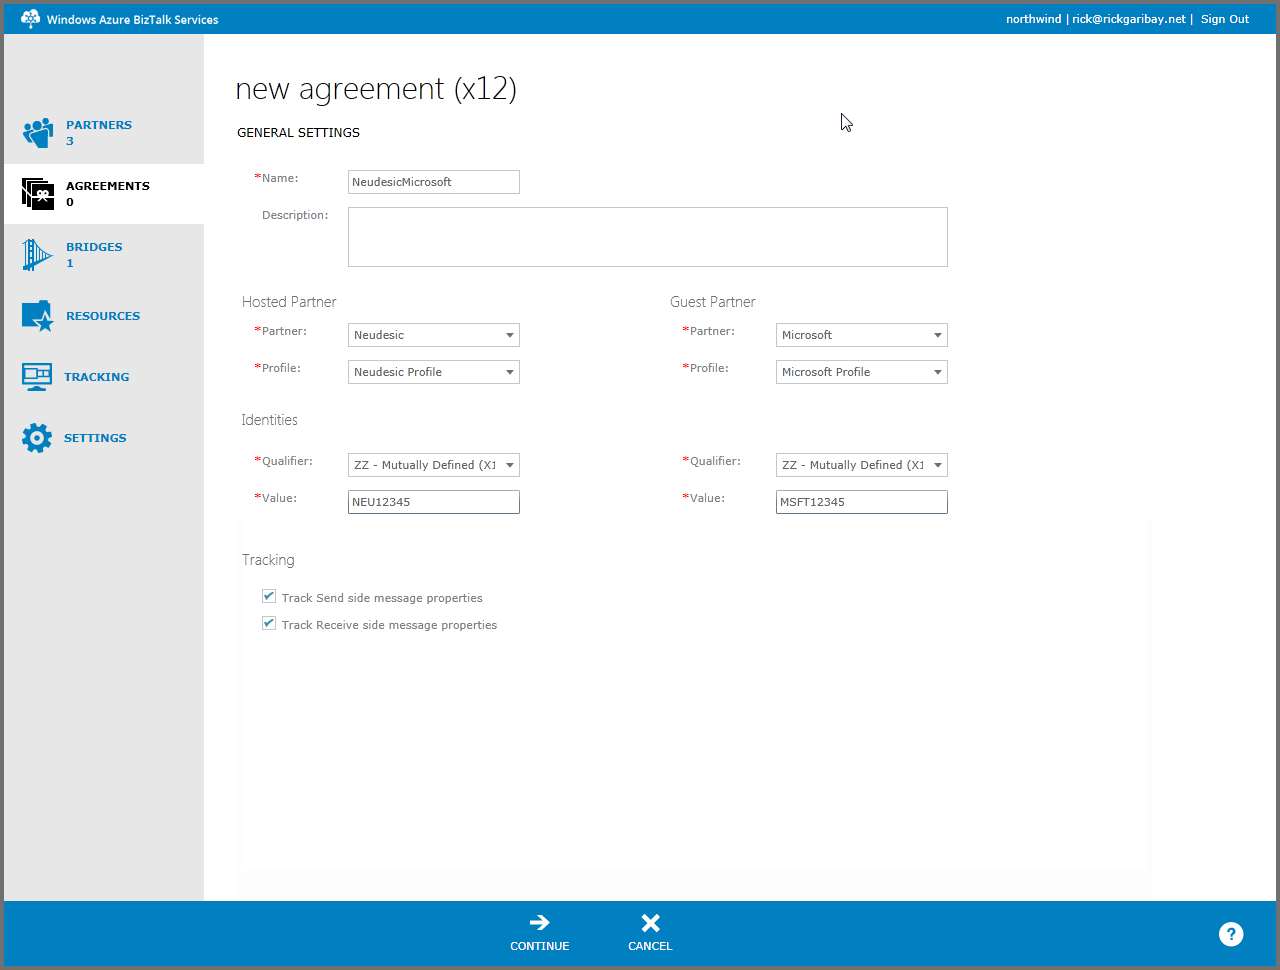 Figure 1: Partners, Agreements, Bridges, and Tracking is provided via the Windows Azure BizTalk Services Portal.